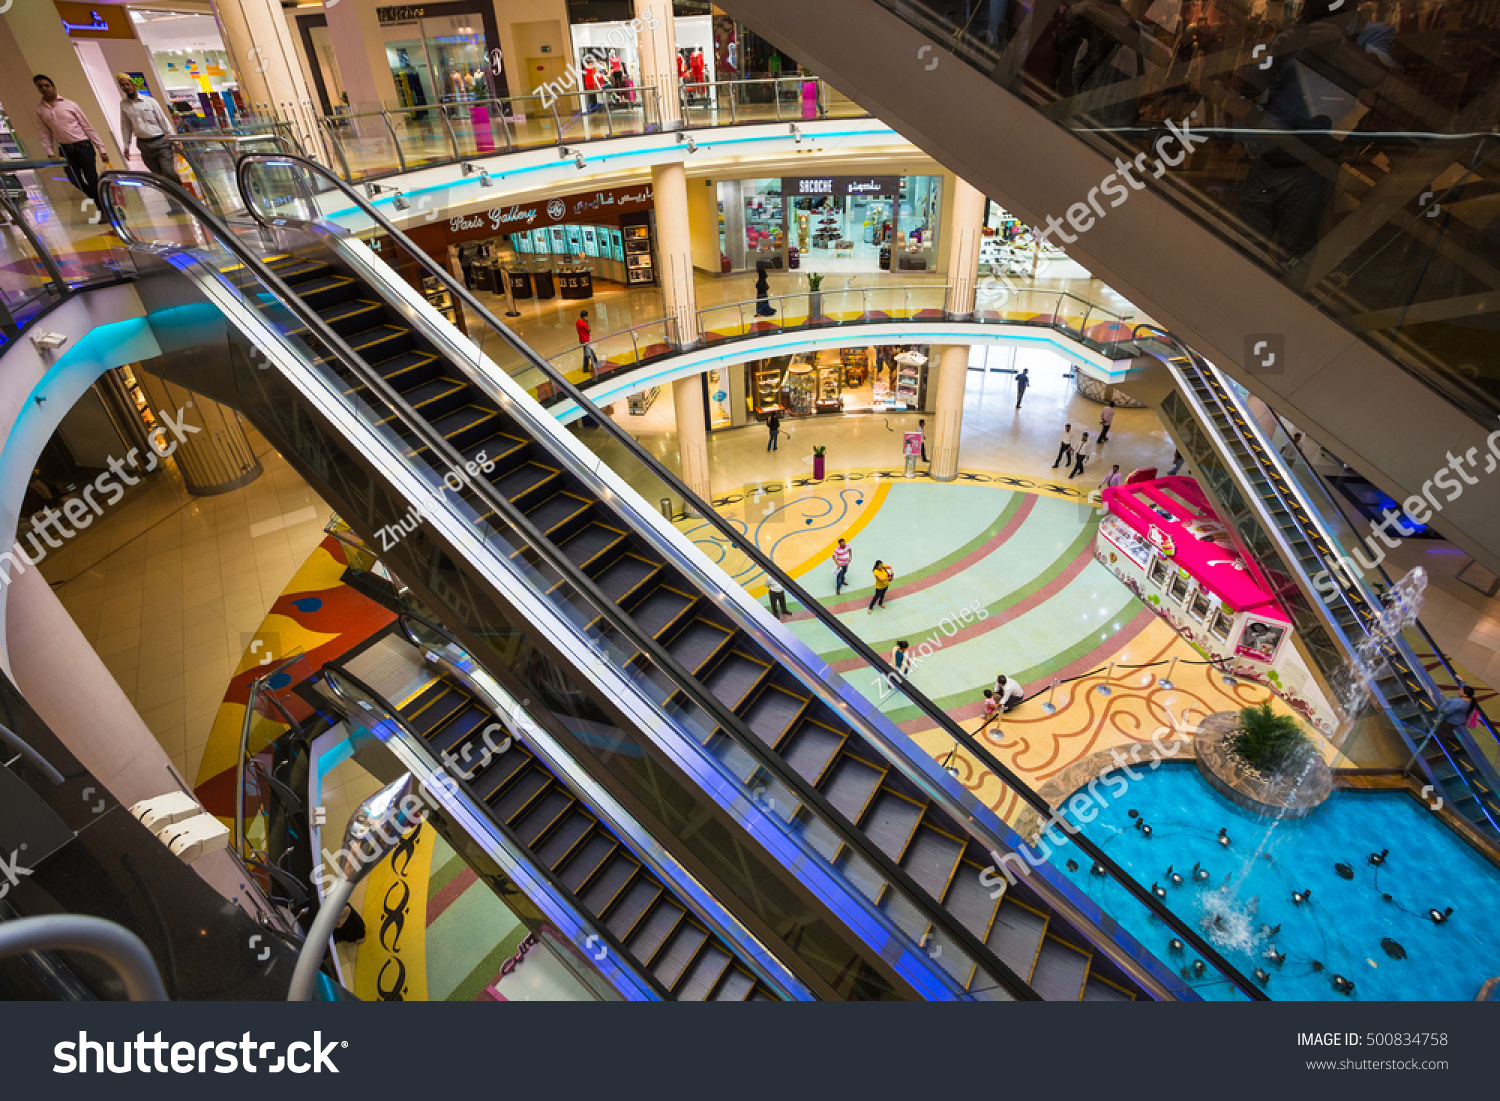 238 Sharjah shopping center Images, Stock Photos & Vectors | Shutterstock